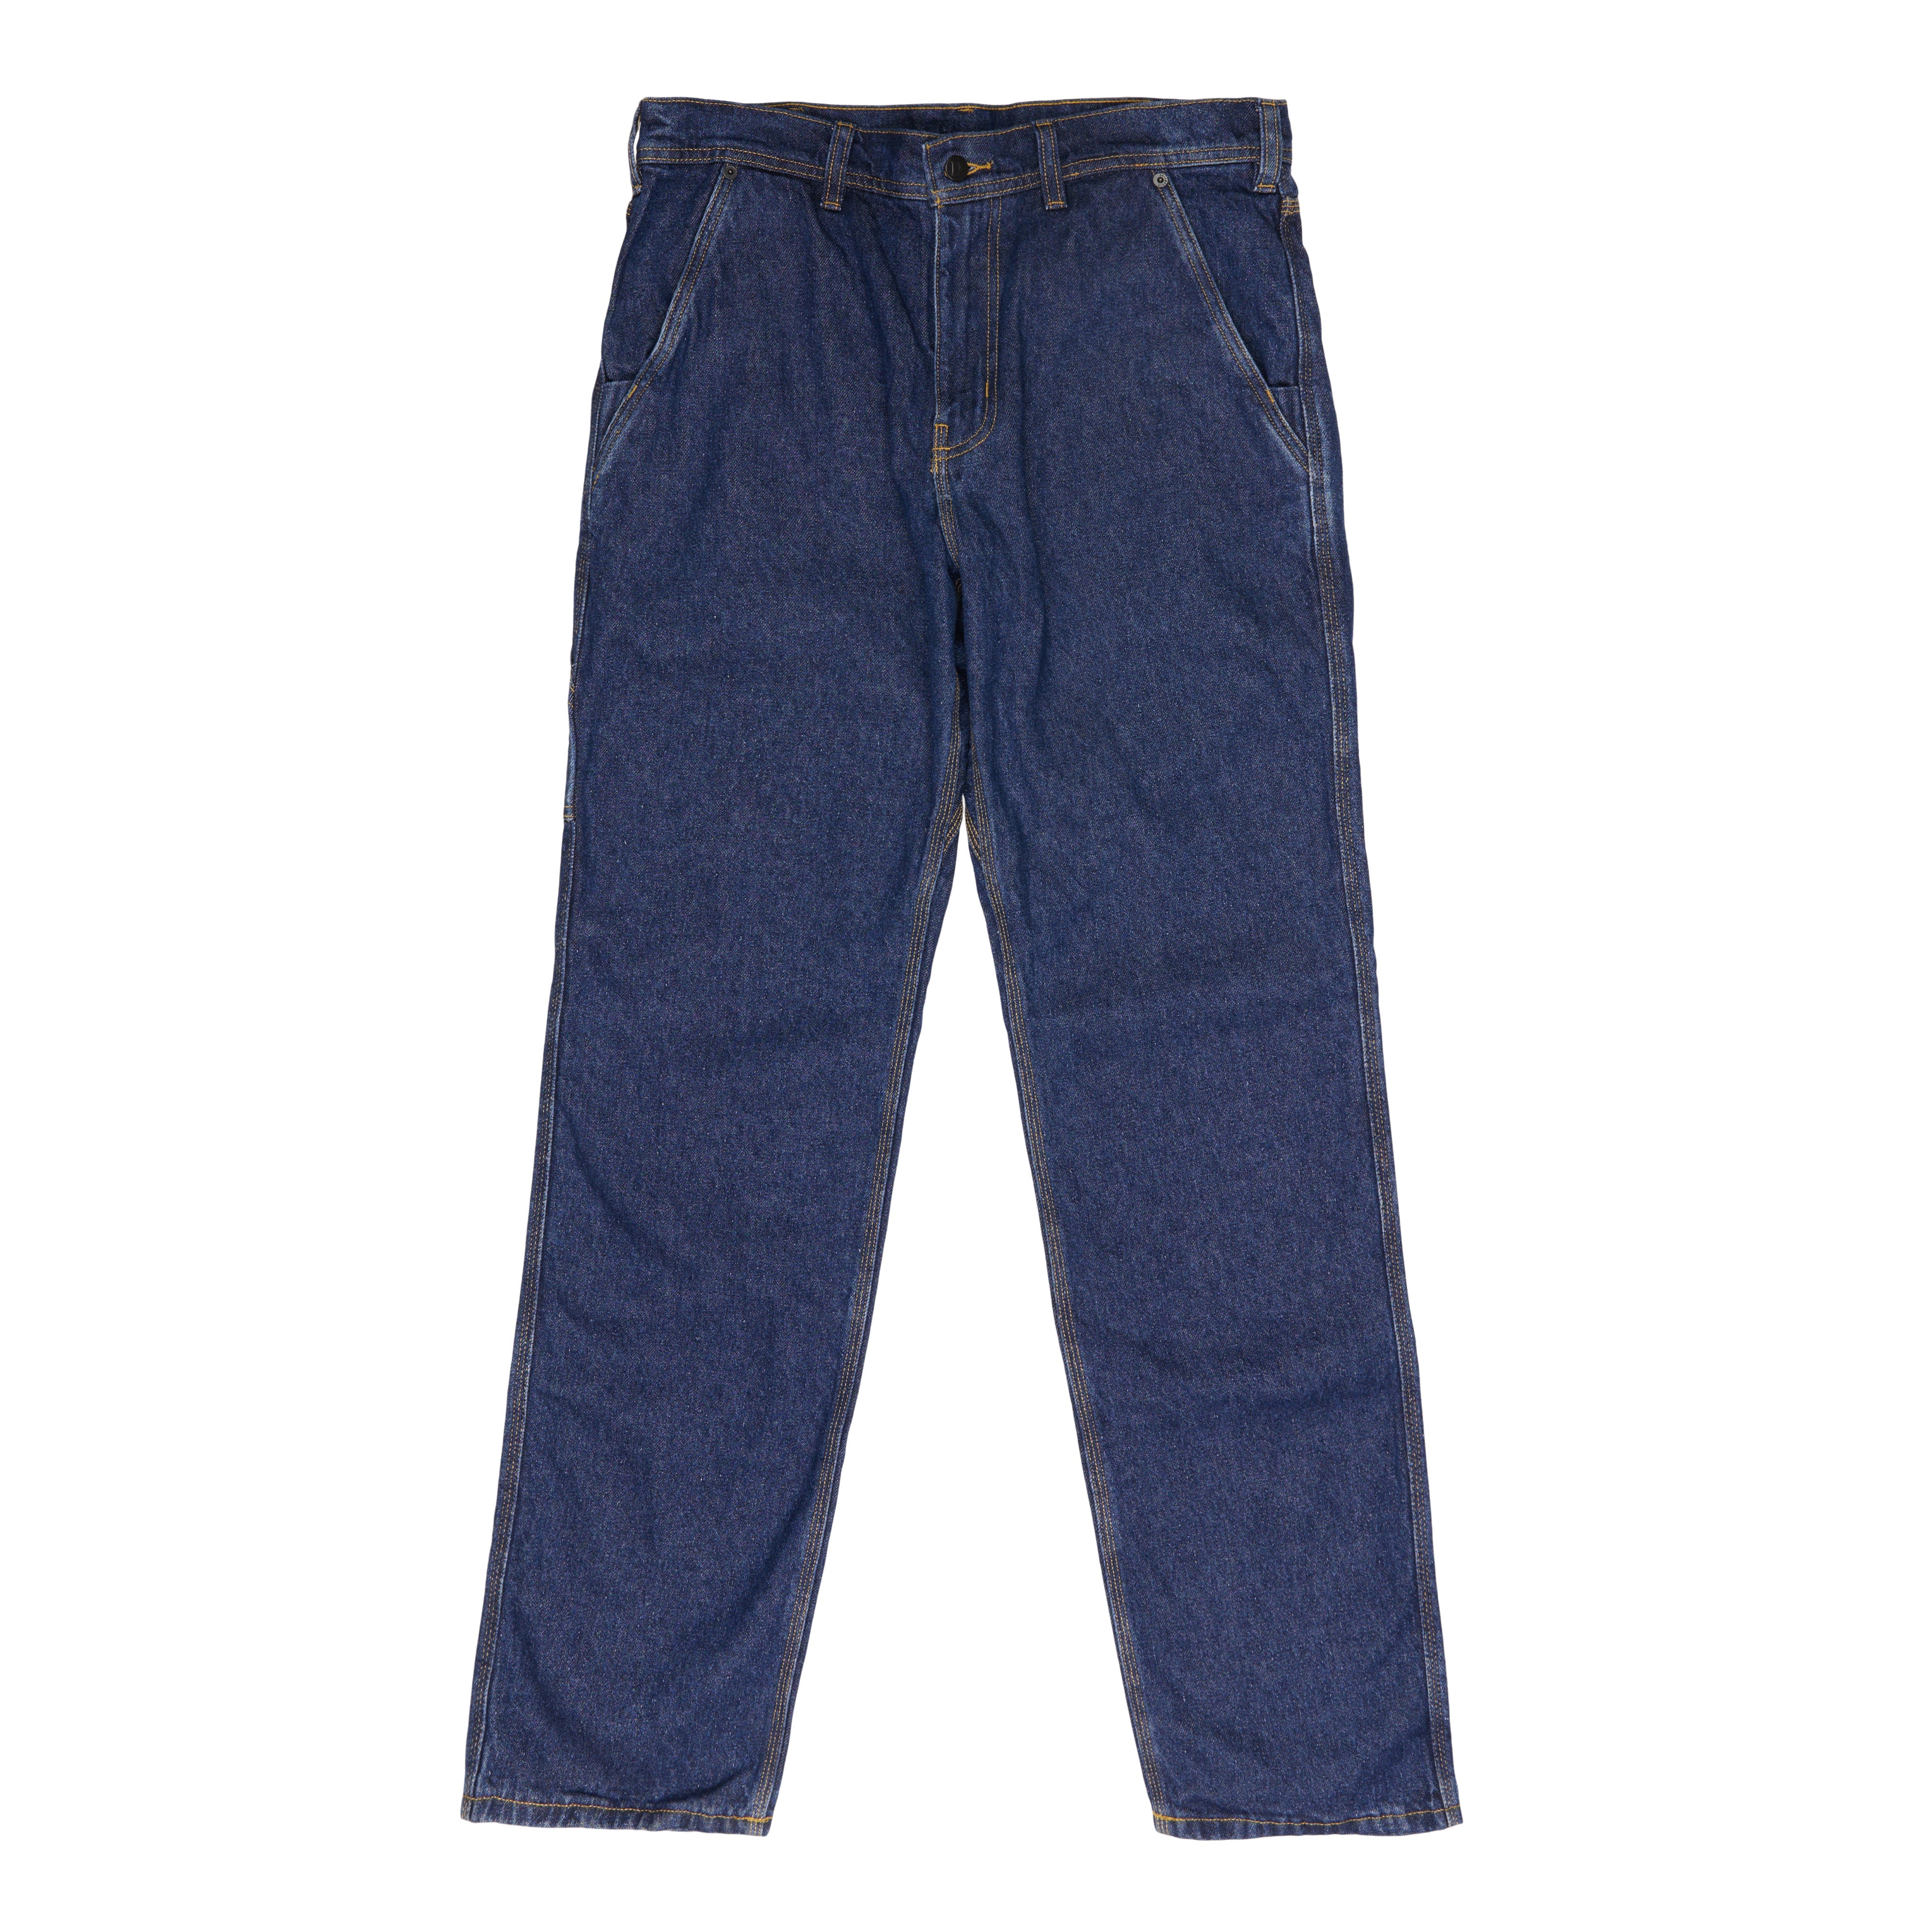 Men's Hemp Denim 5-Pocket Pants - Long